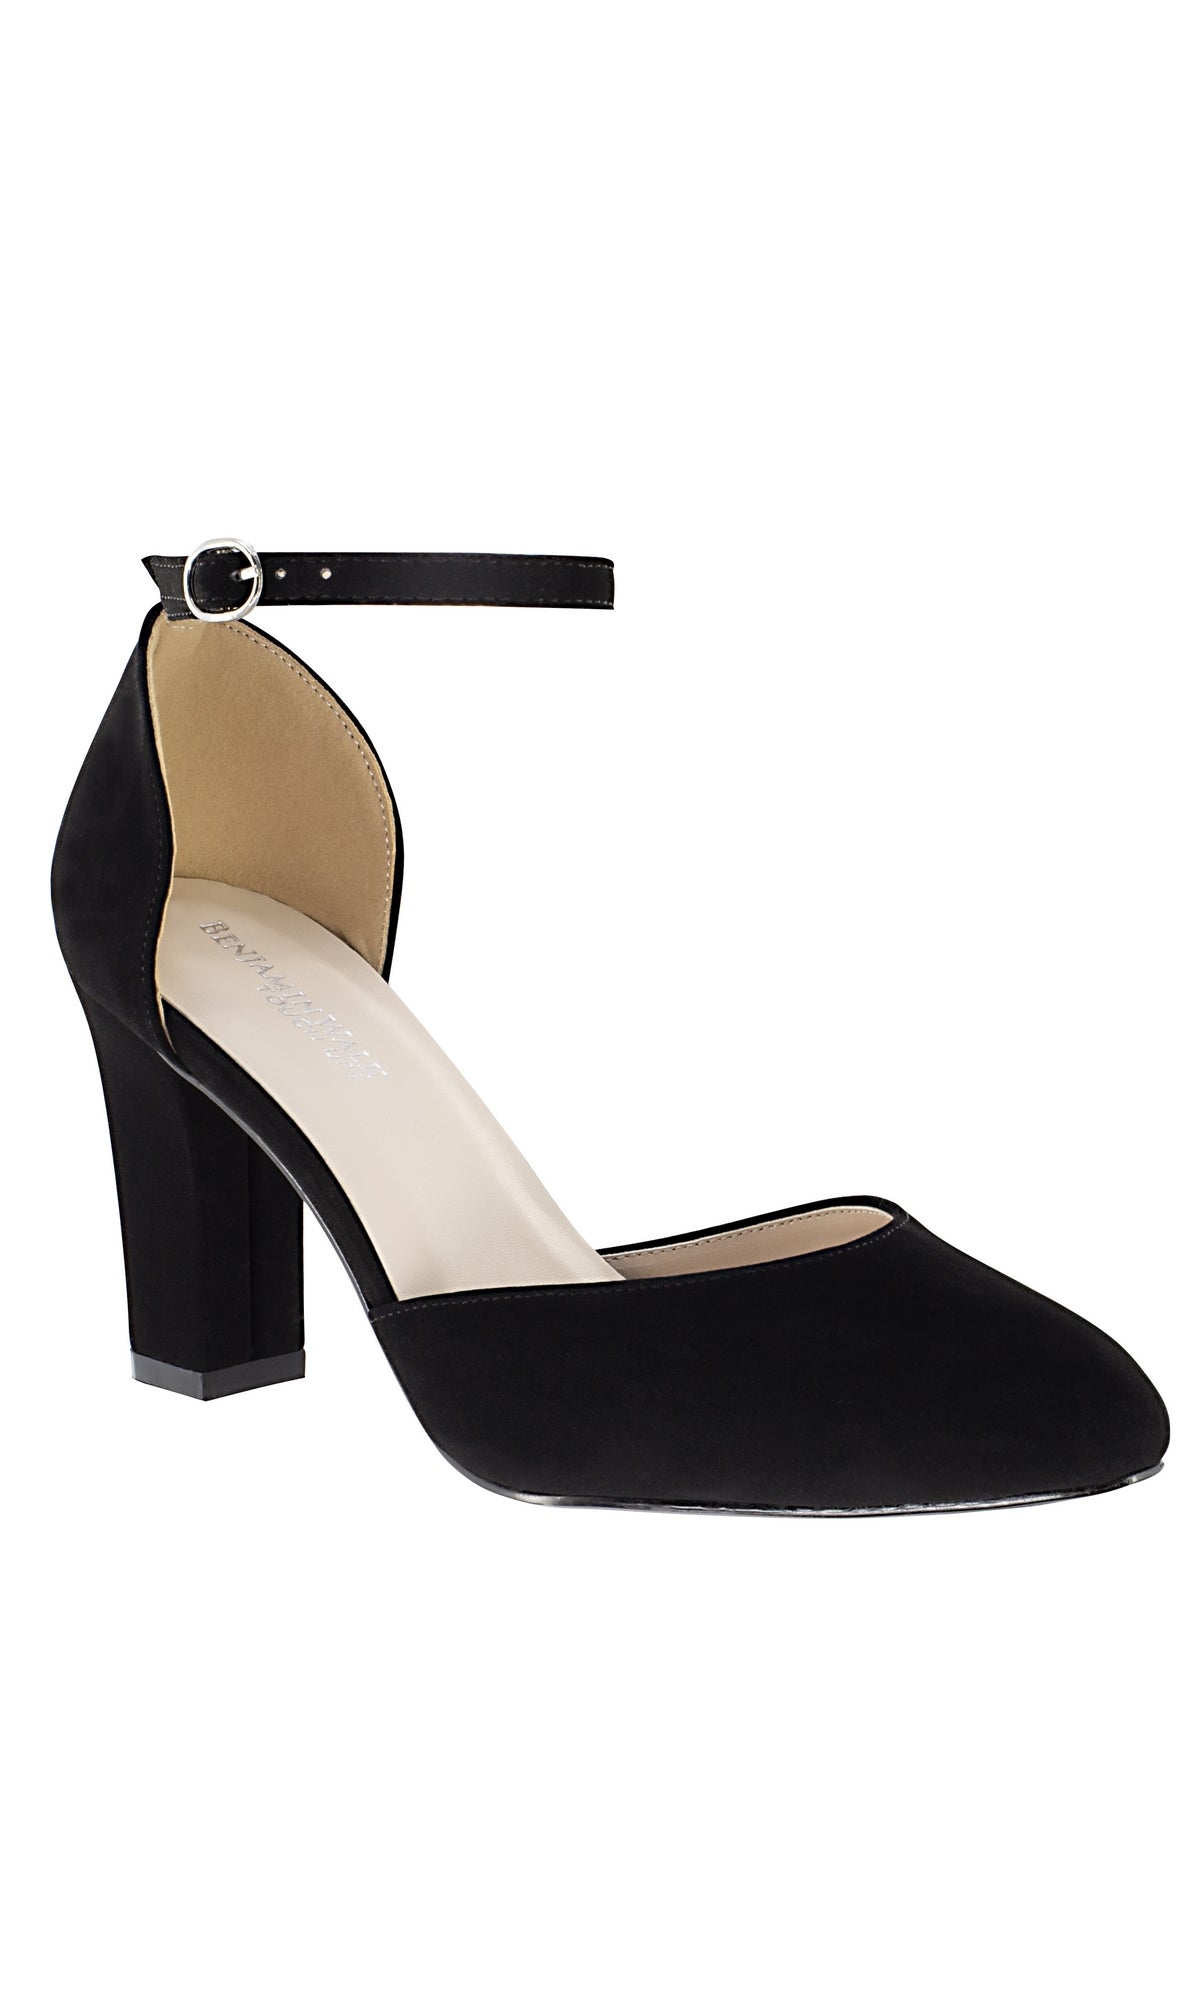 Women Black and White Stiletto Heels Dress Prom Shoes Peep Toe Ankle Strap  Pumps | eBay